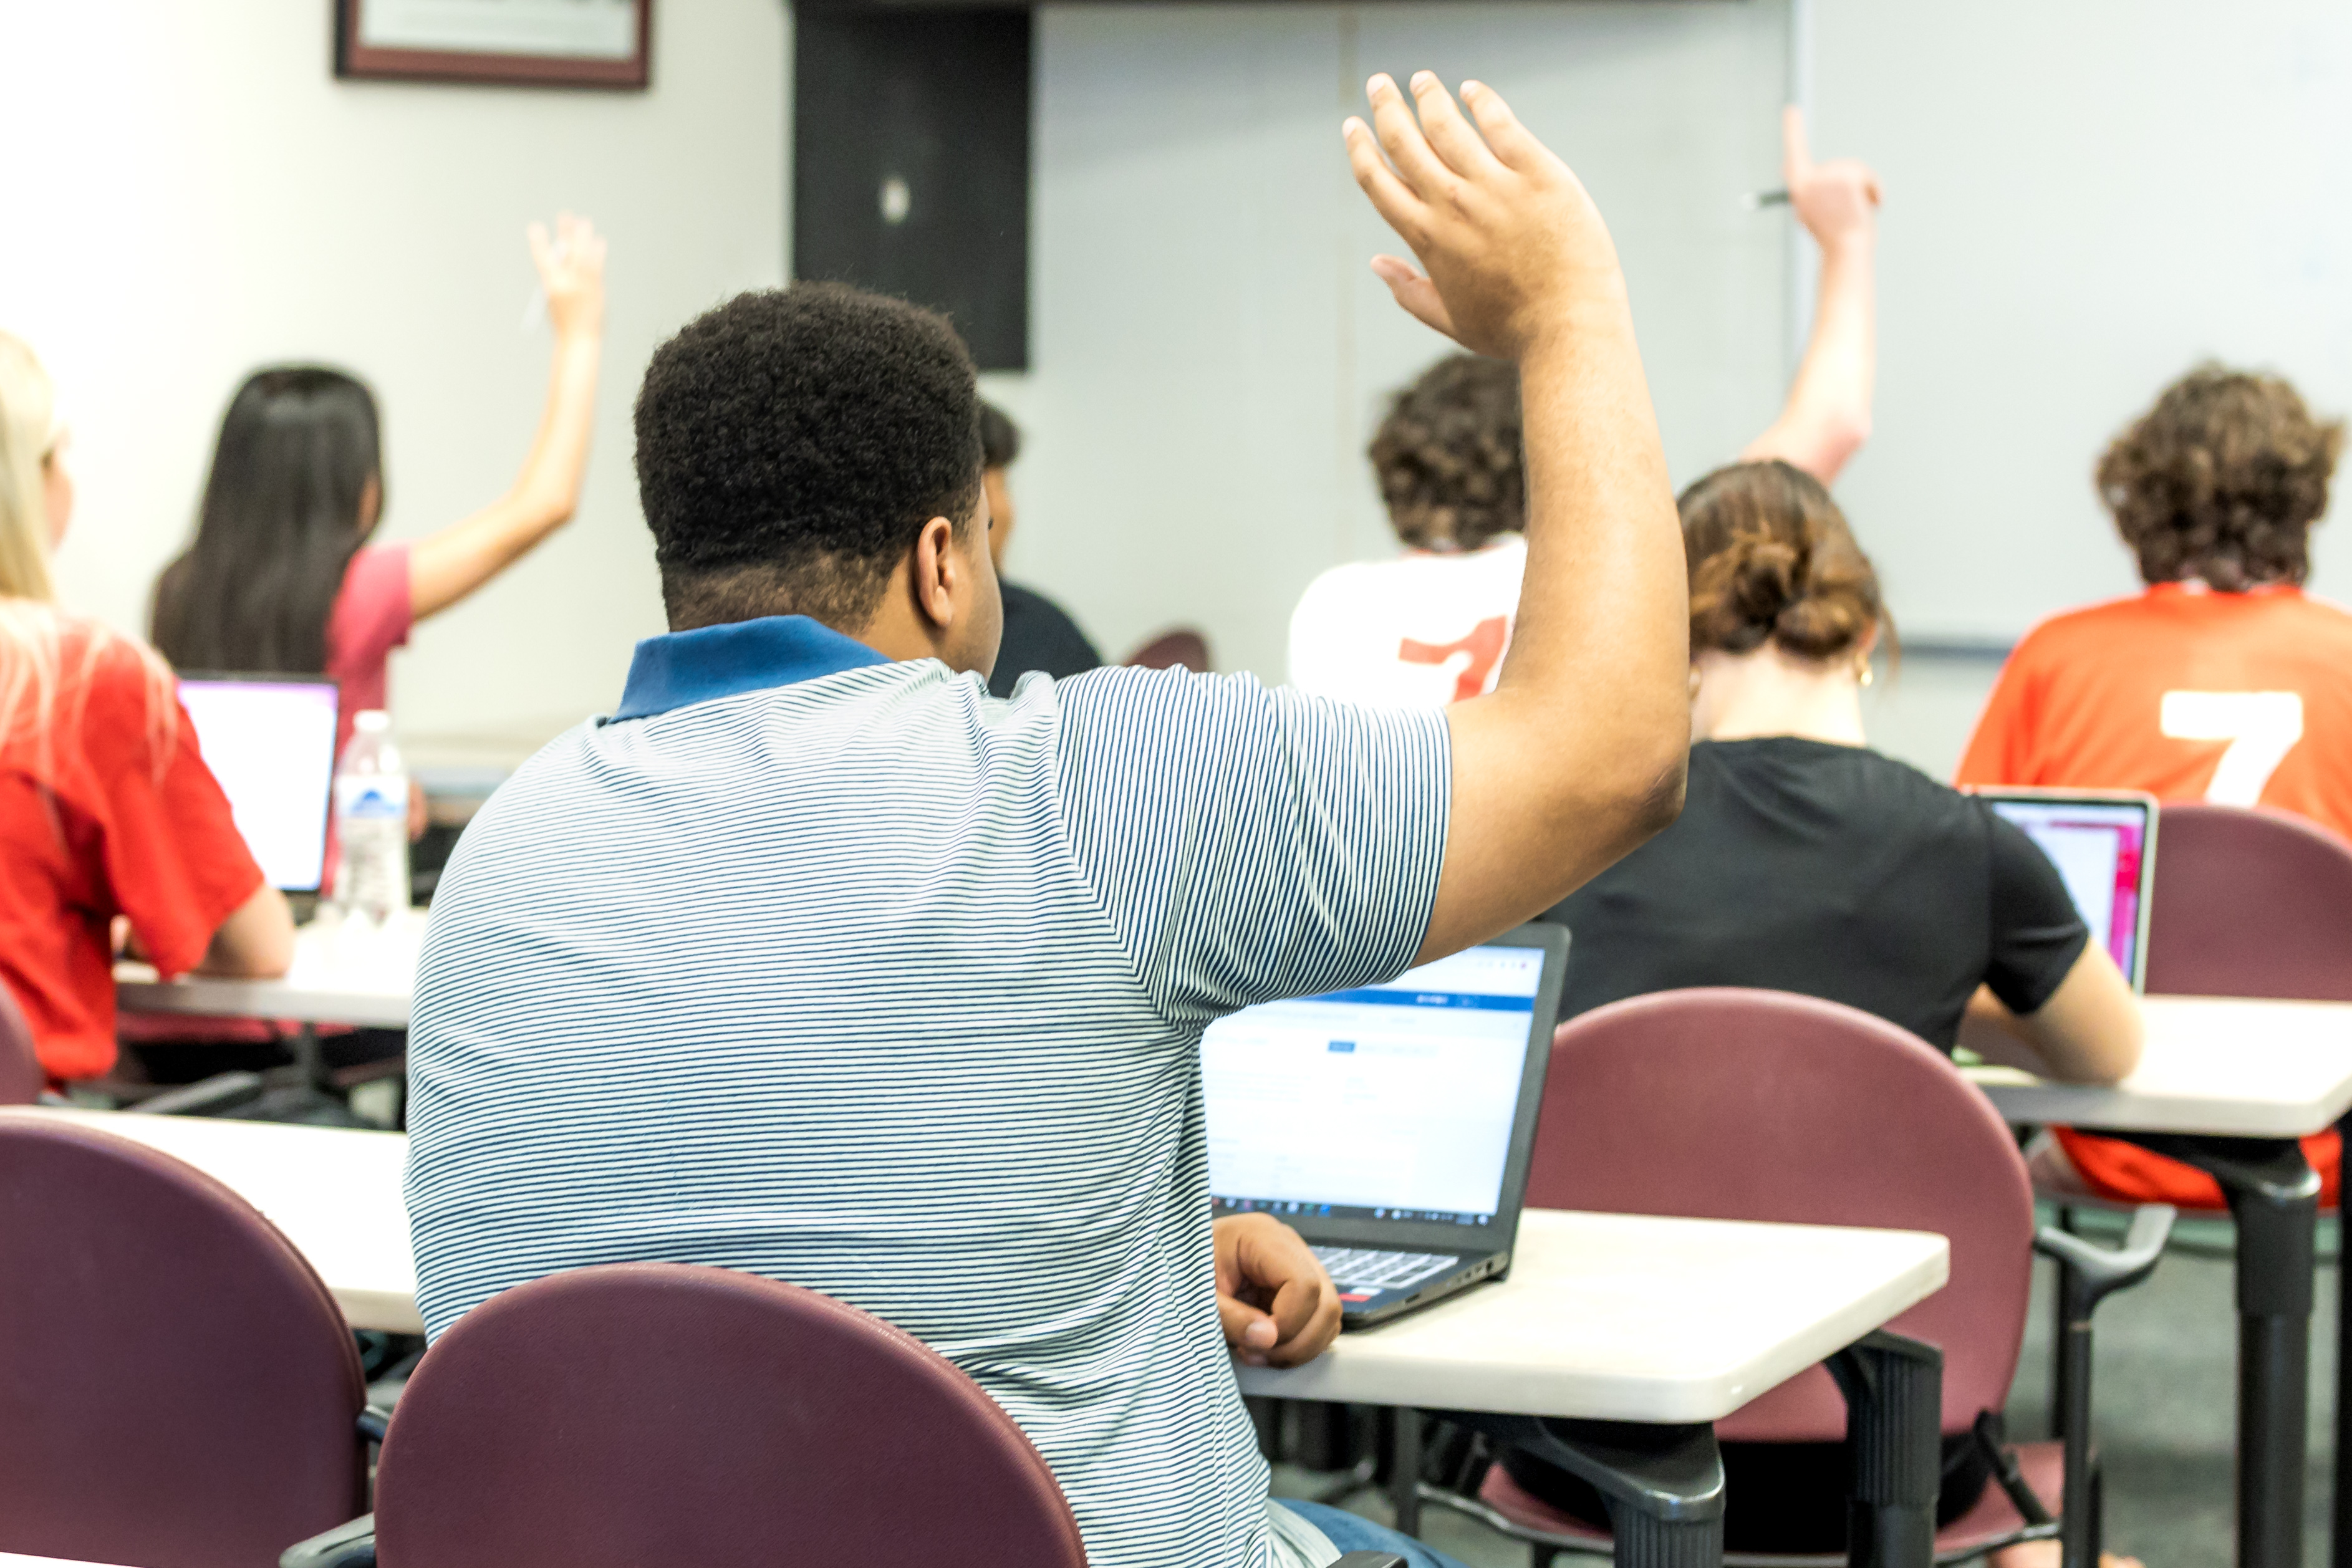 Student raising hand in class.